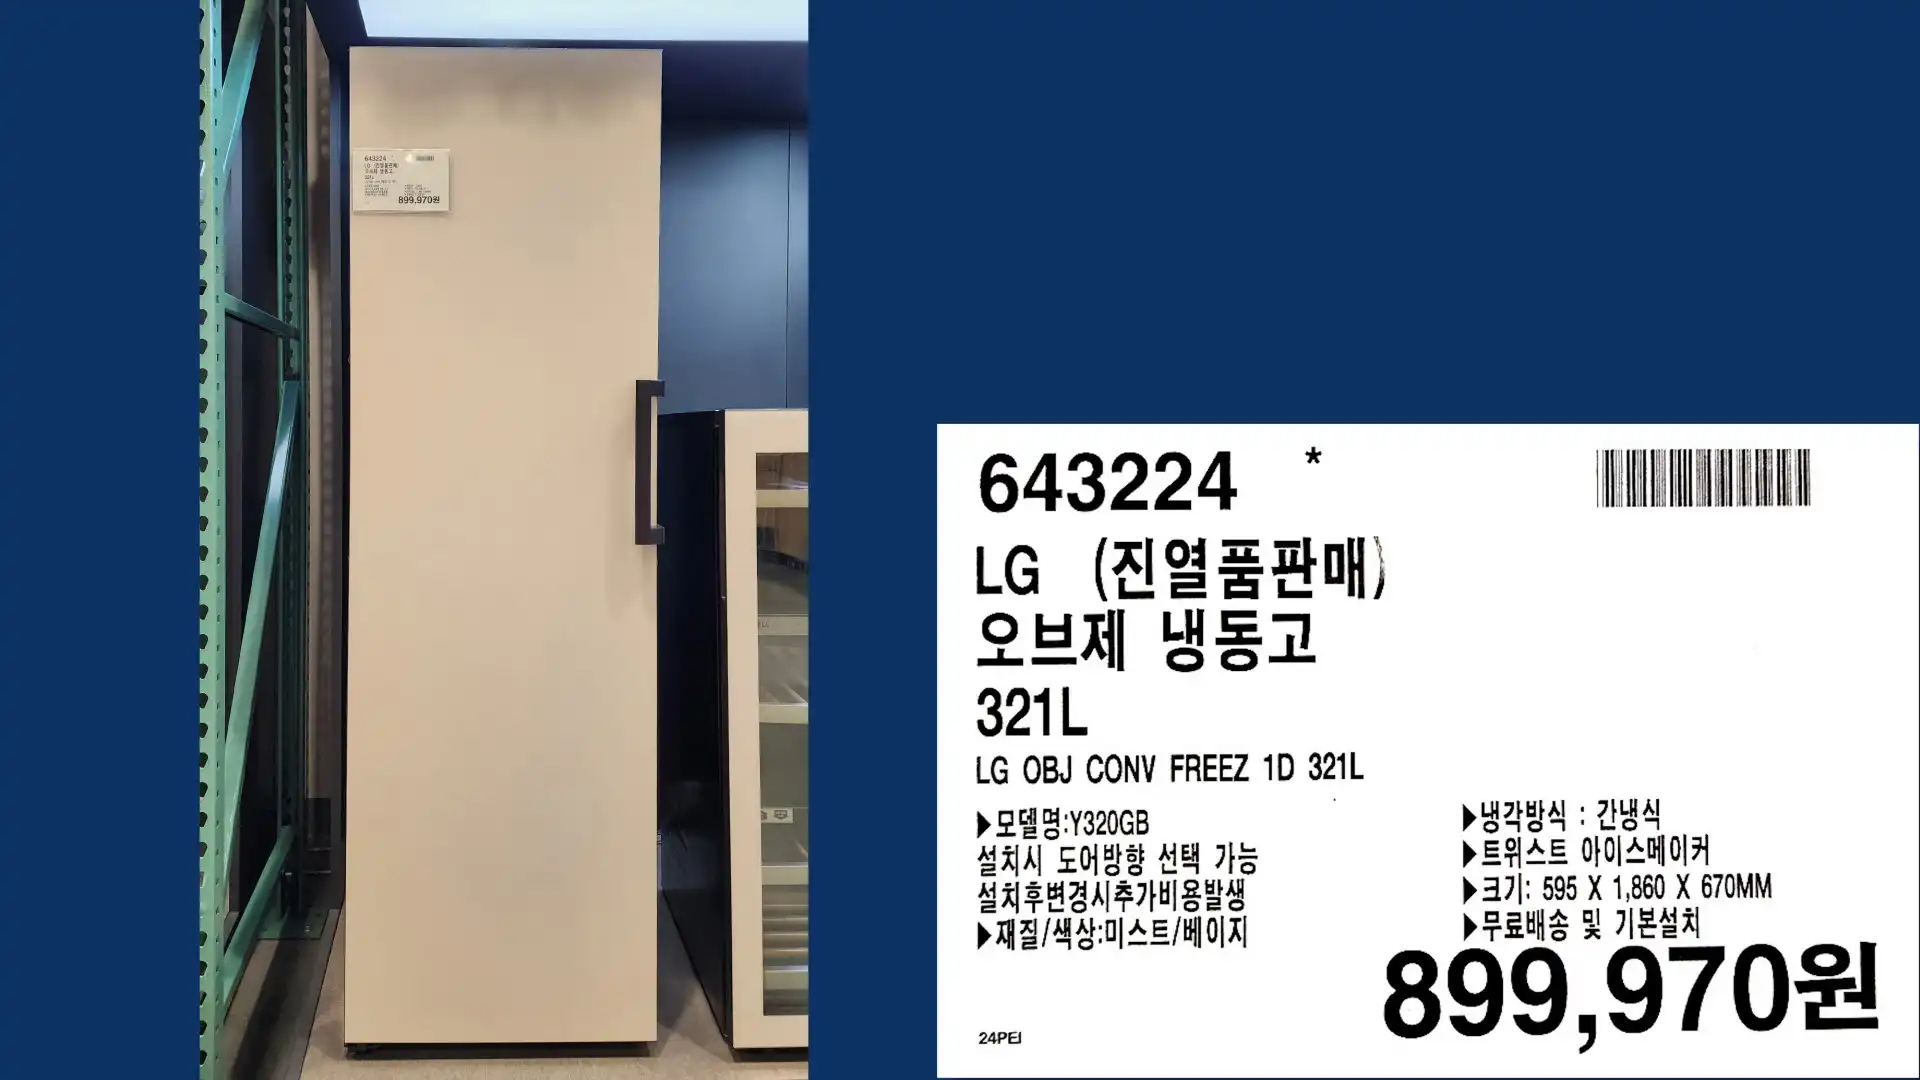 LG (진열품판매)
오브제 냉동고
321L
LG OBJ CONV FREEZ 1D 321L
▶모델명:Y320GB
▶설치시 도어방향 선택 가능
▶설치후변경시추가비용발생
▶재질/색상:미스트/베이지
▶냉각방식: 간냉식
▶ 트위스트 아이스메이커
▶크기: 595 X 1&#44;860 X 670MM
▶무료배송 및 기본설치
899&#44;970원